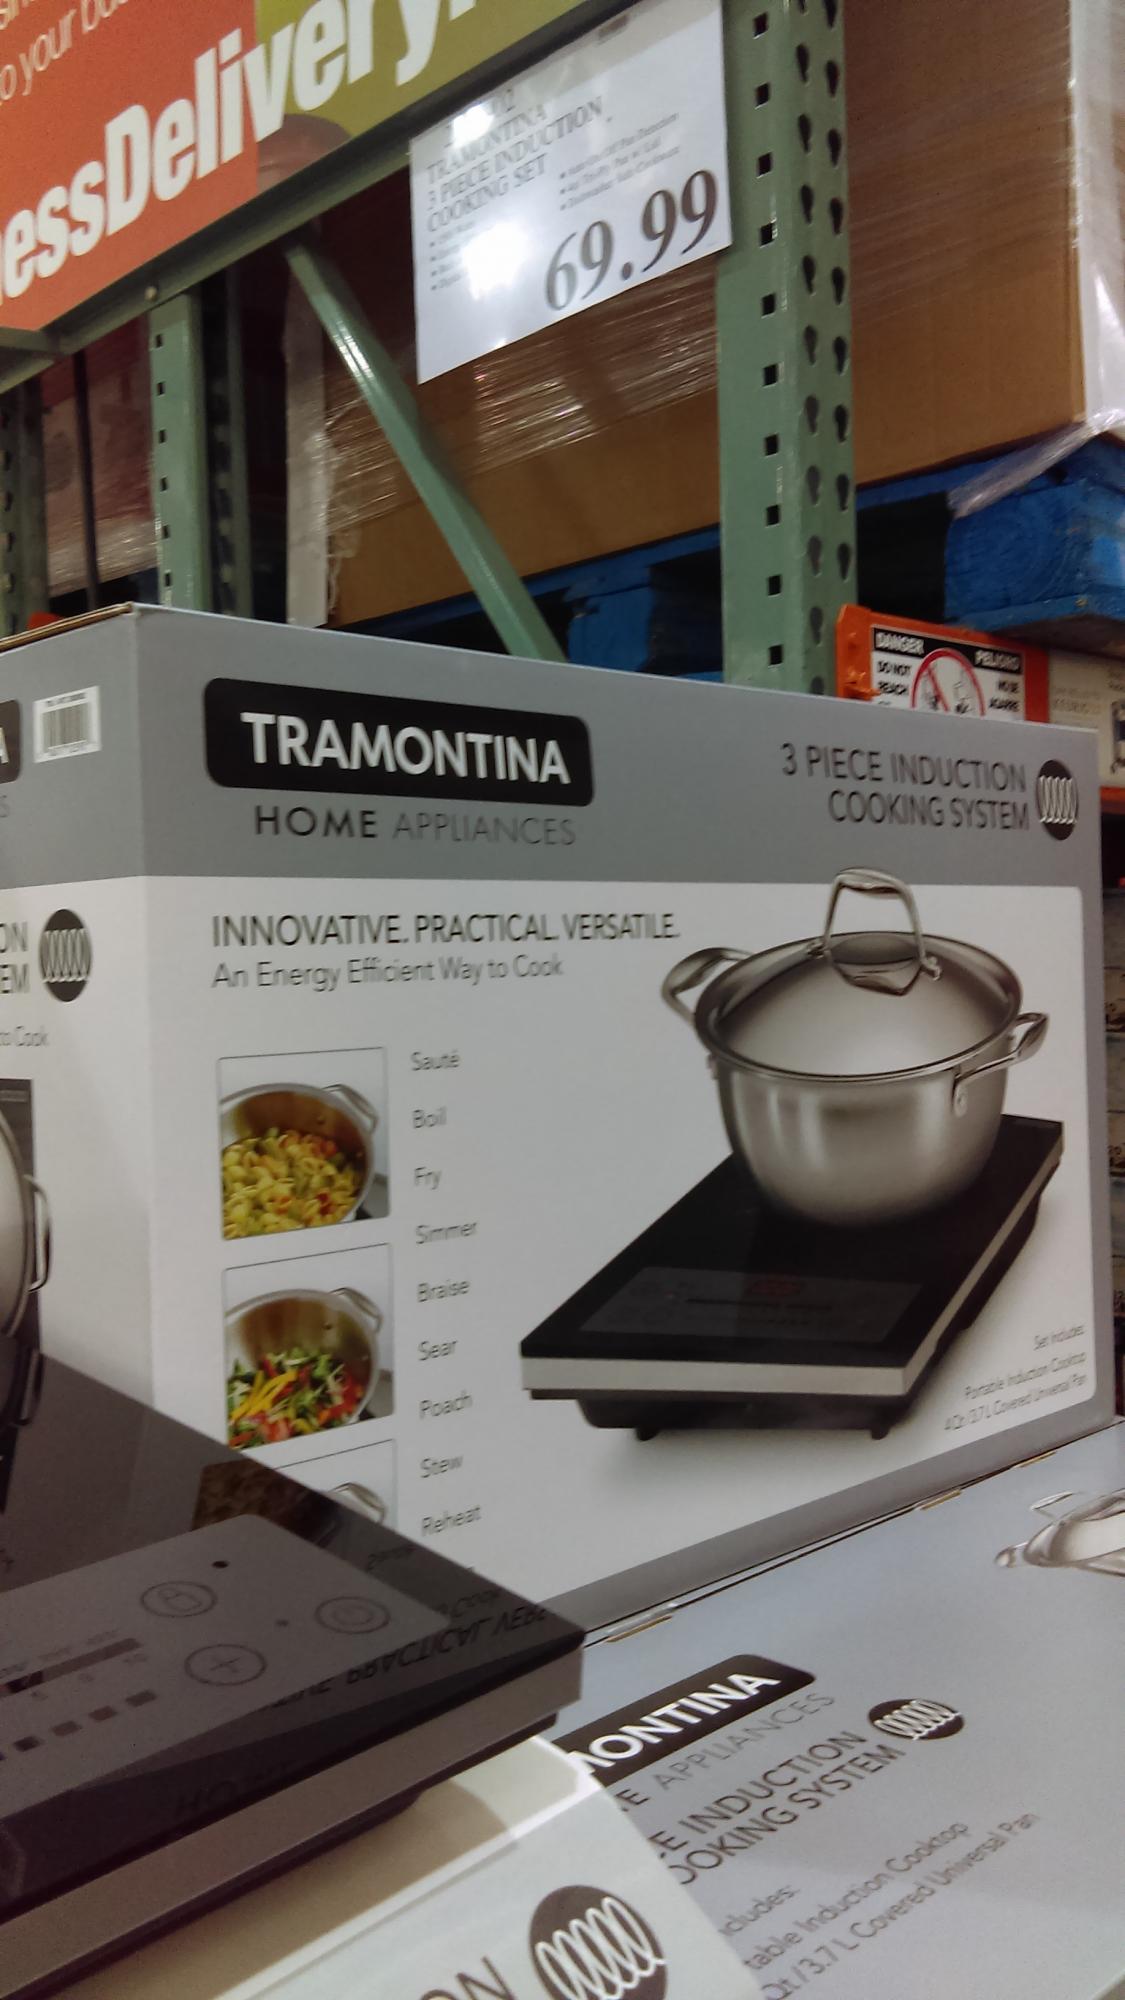 Tramontina 3-Piece Induction Cooking Set